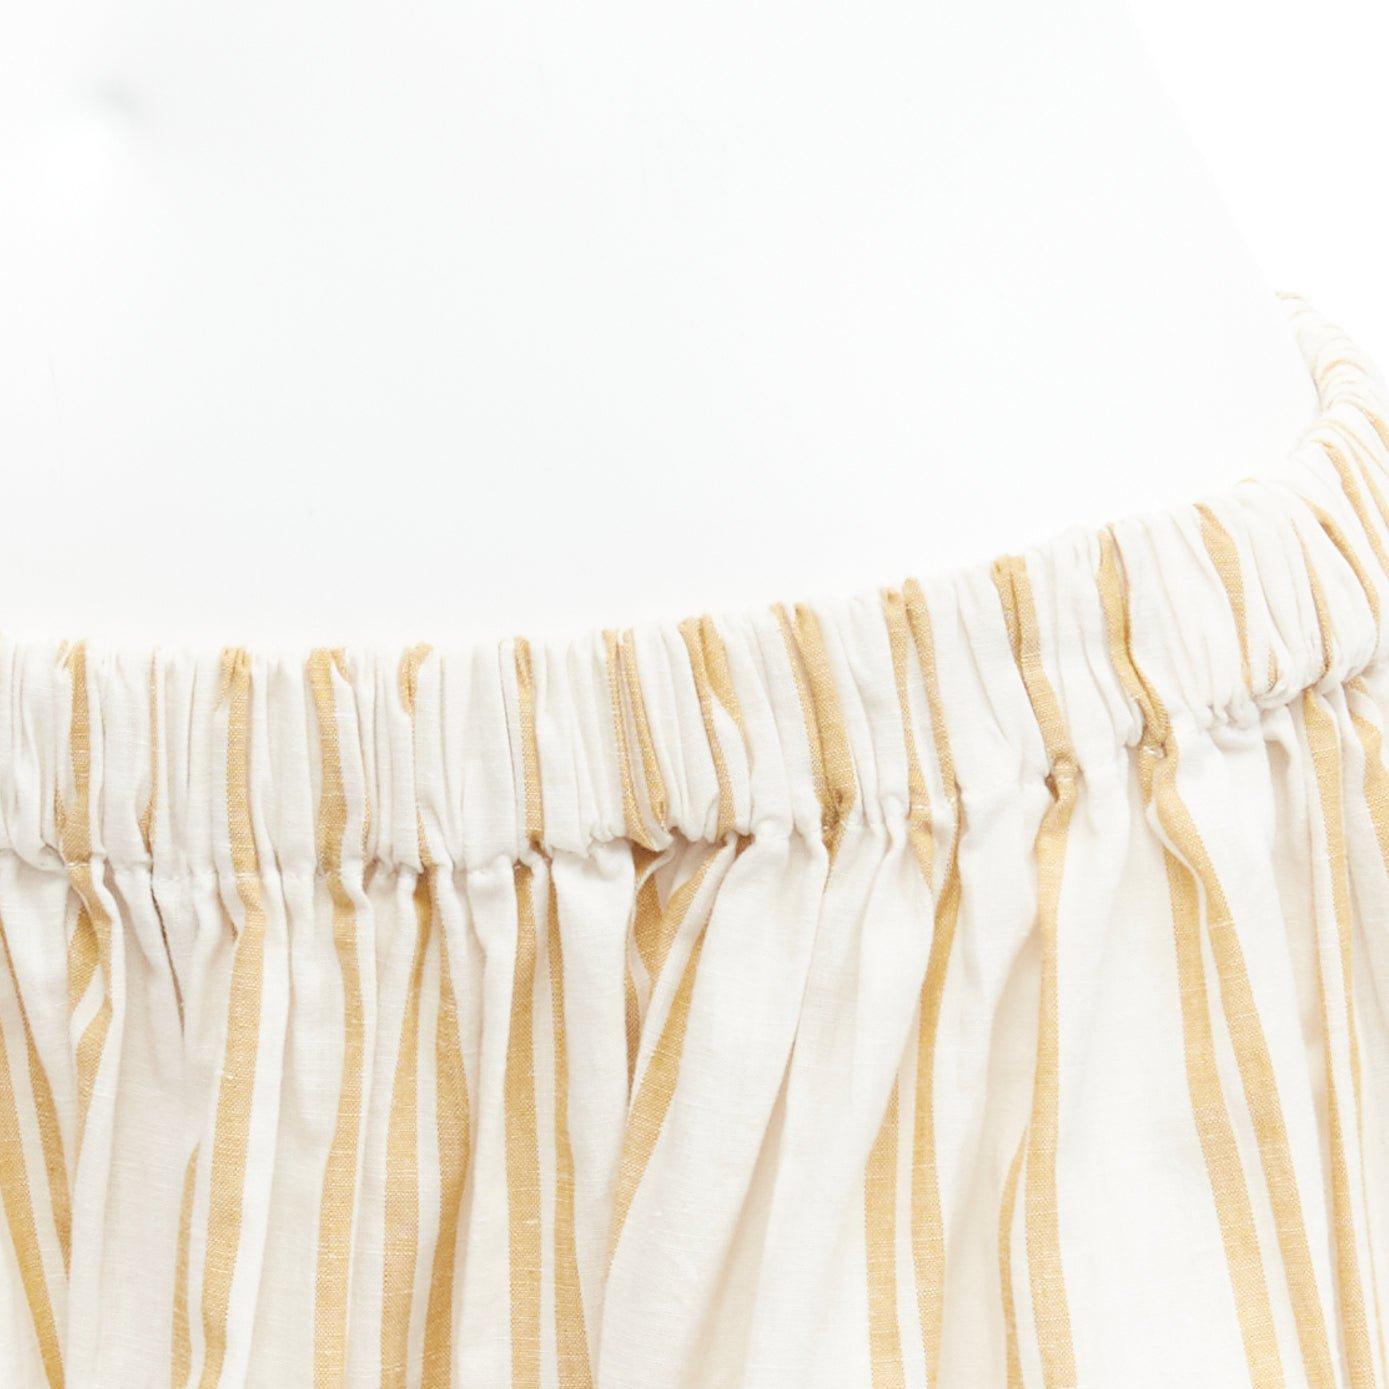 OSCAR DE LA RENTA 2019 cotton ramie linen ruched cutout striped balloon skirt US0 XS
Reference: LNKO/A02155
Brand: Oscar De La Renta
Collection: 2019 Spring
Material: Cotton, Ramie, Linen
Color: White, Khaki
Pattern: Striped
Closure: